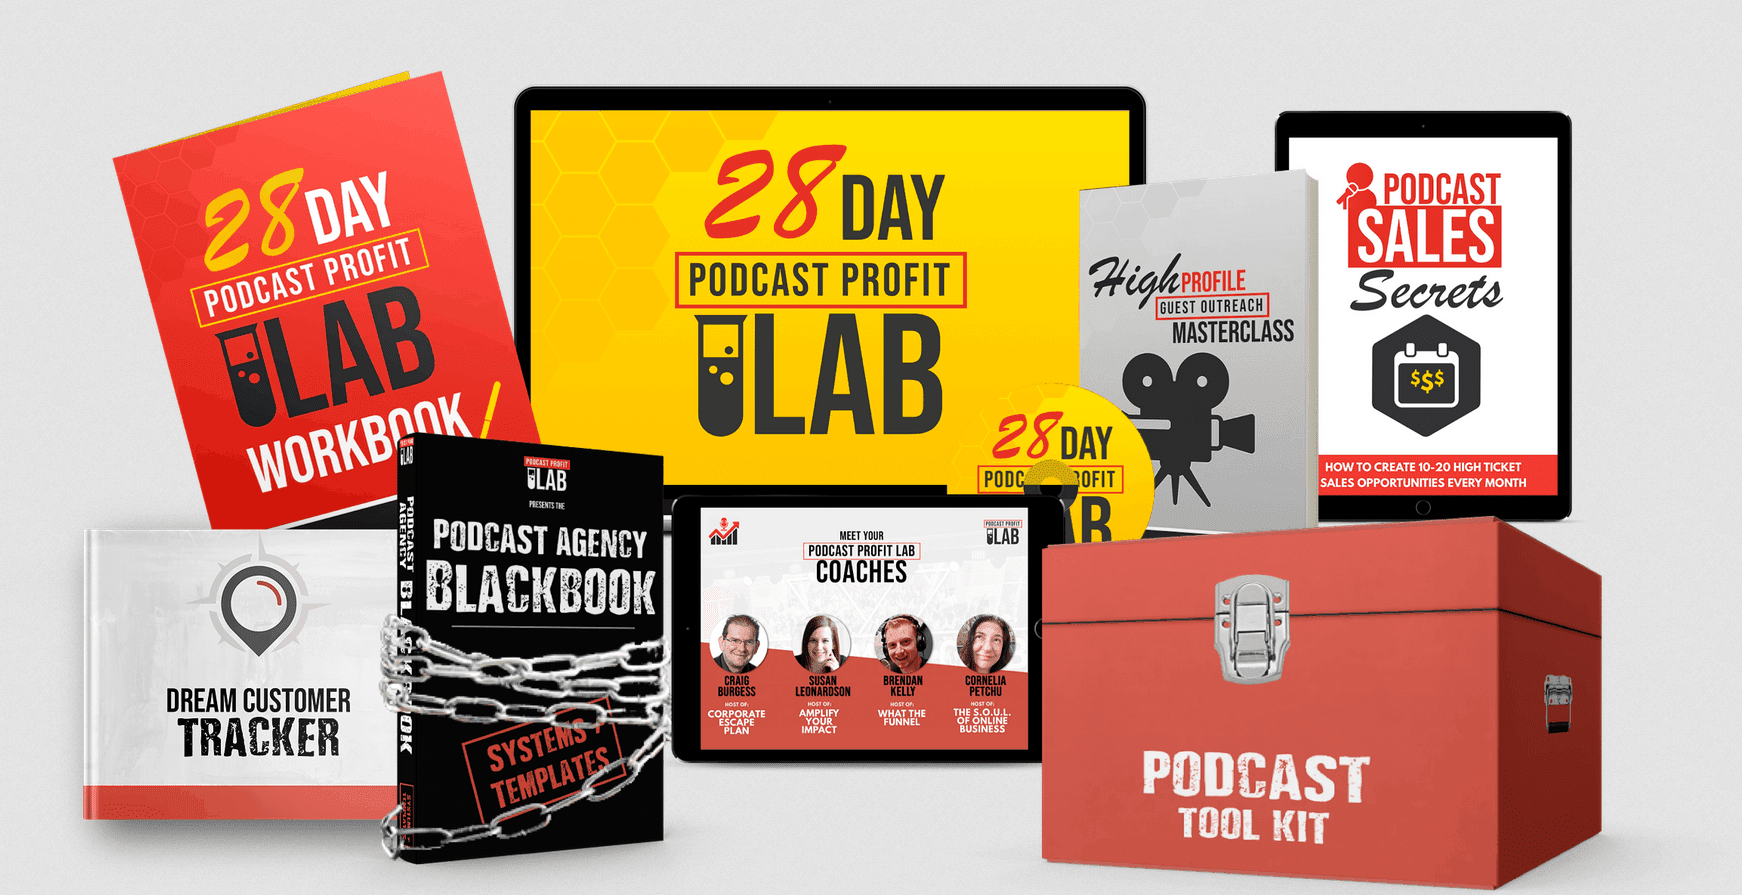 28 Day Podcast Profit LAB